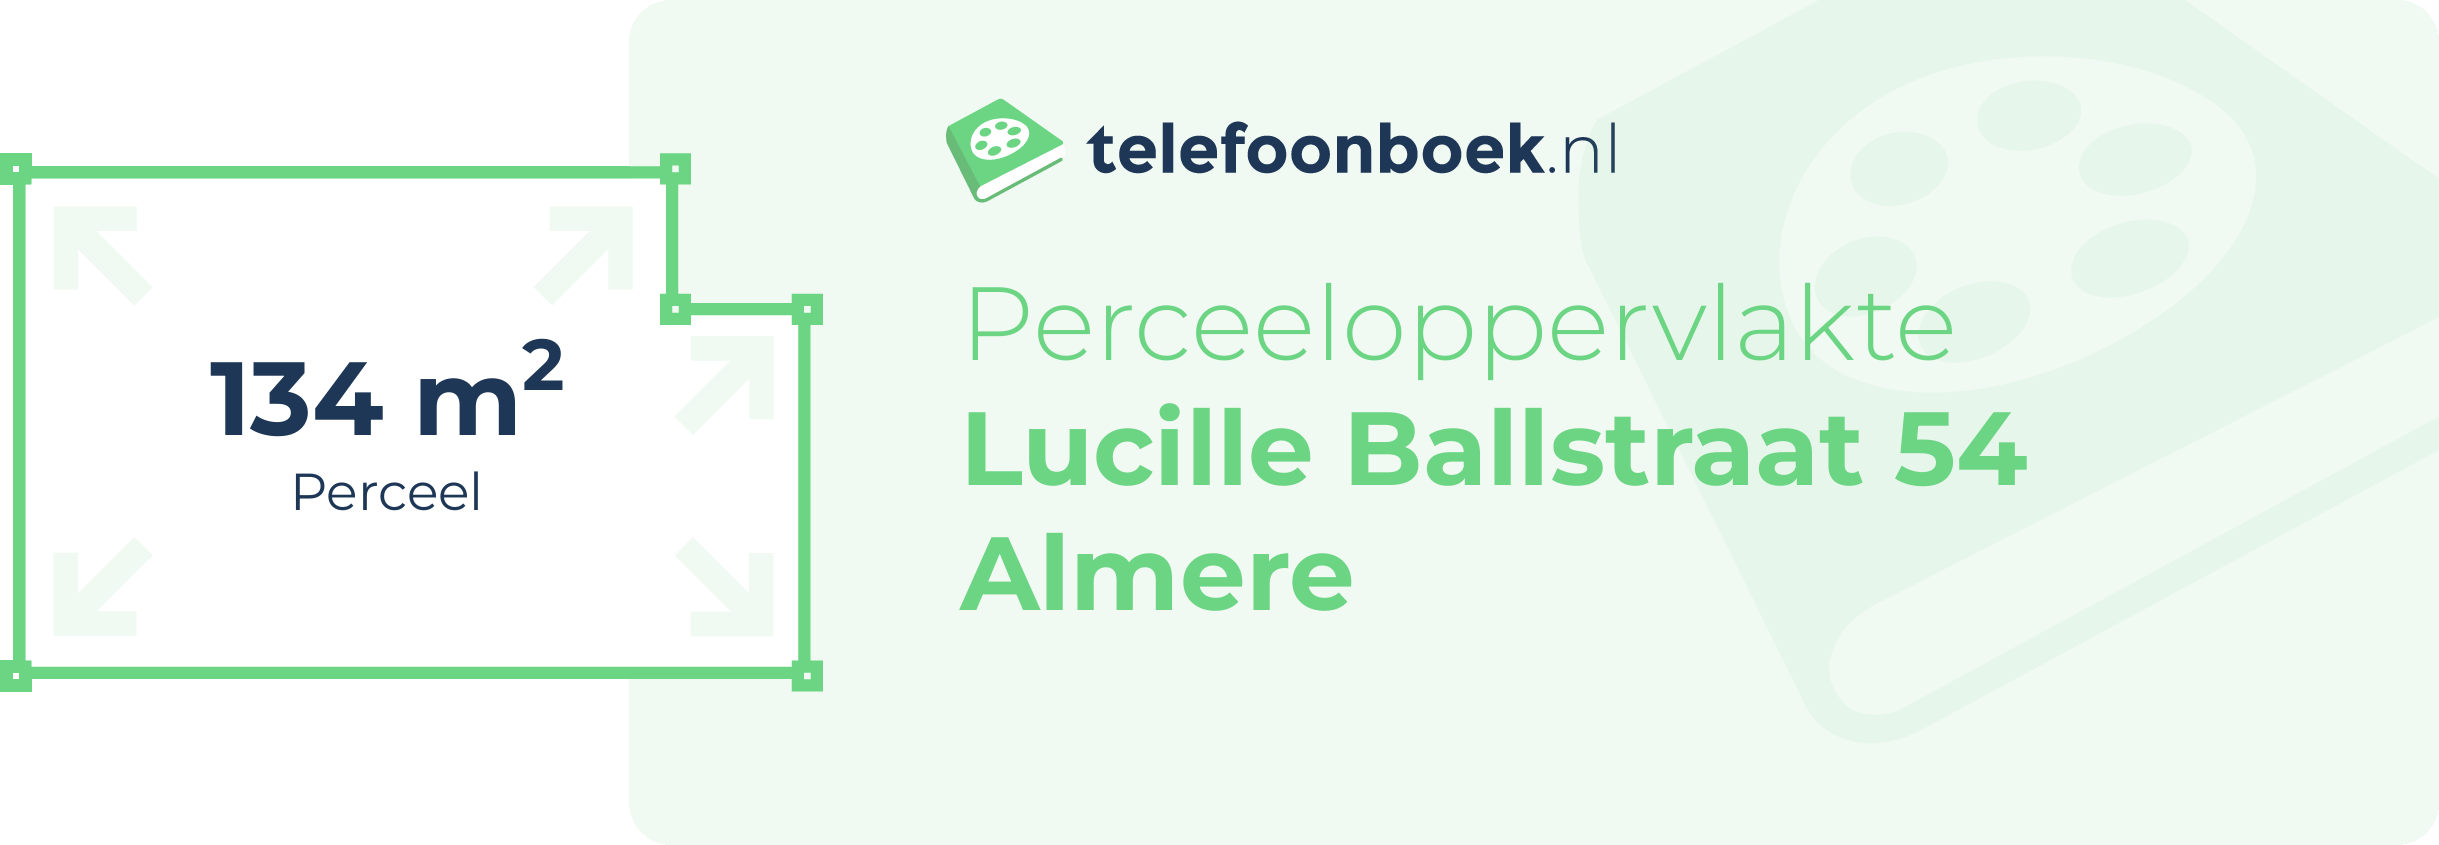 Perceeloppervlakte Lucille Ballstraat 54 Almere